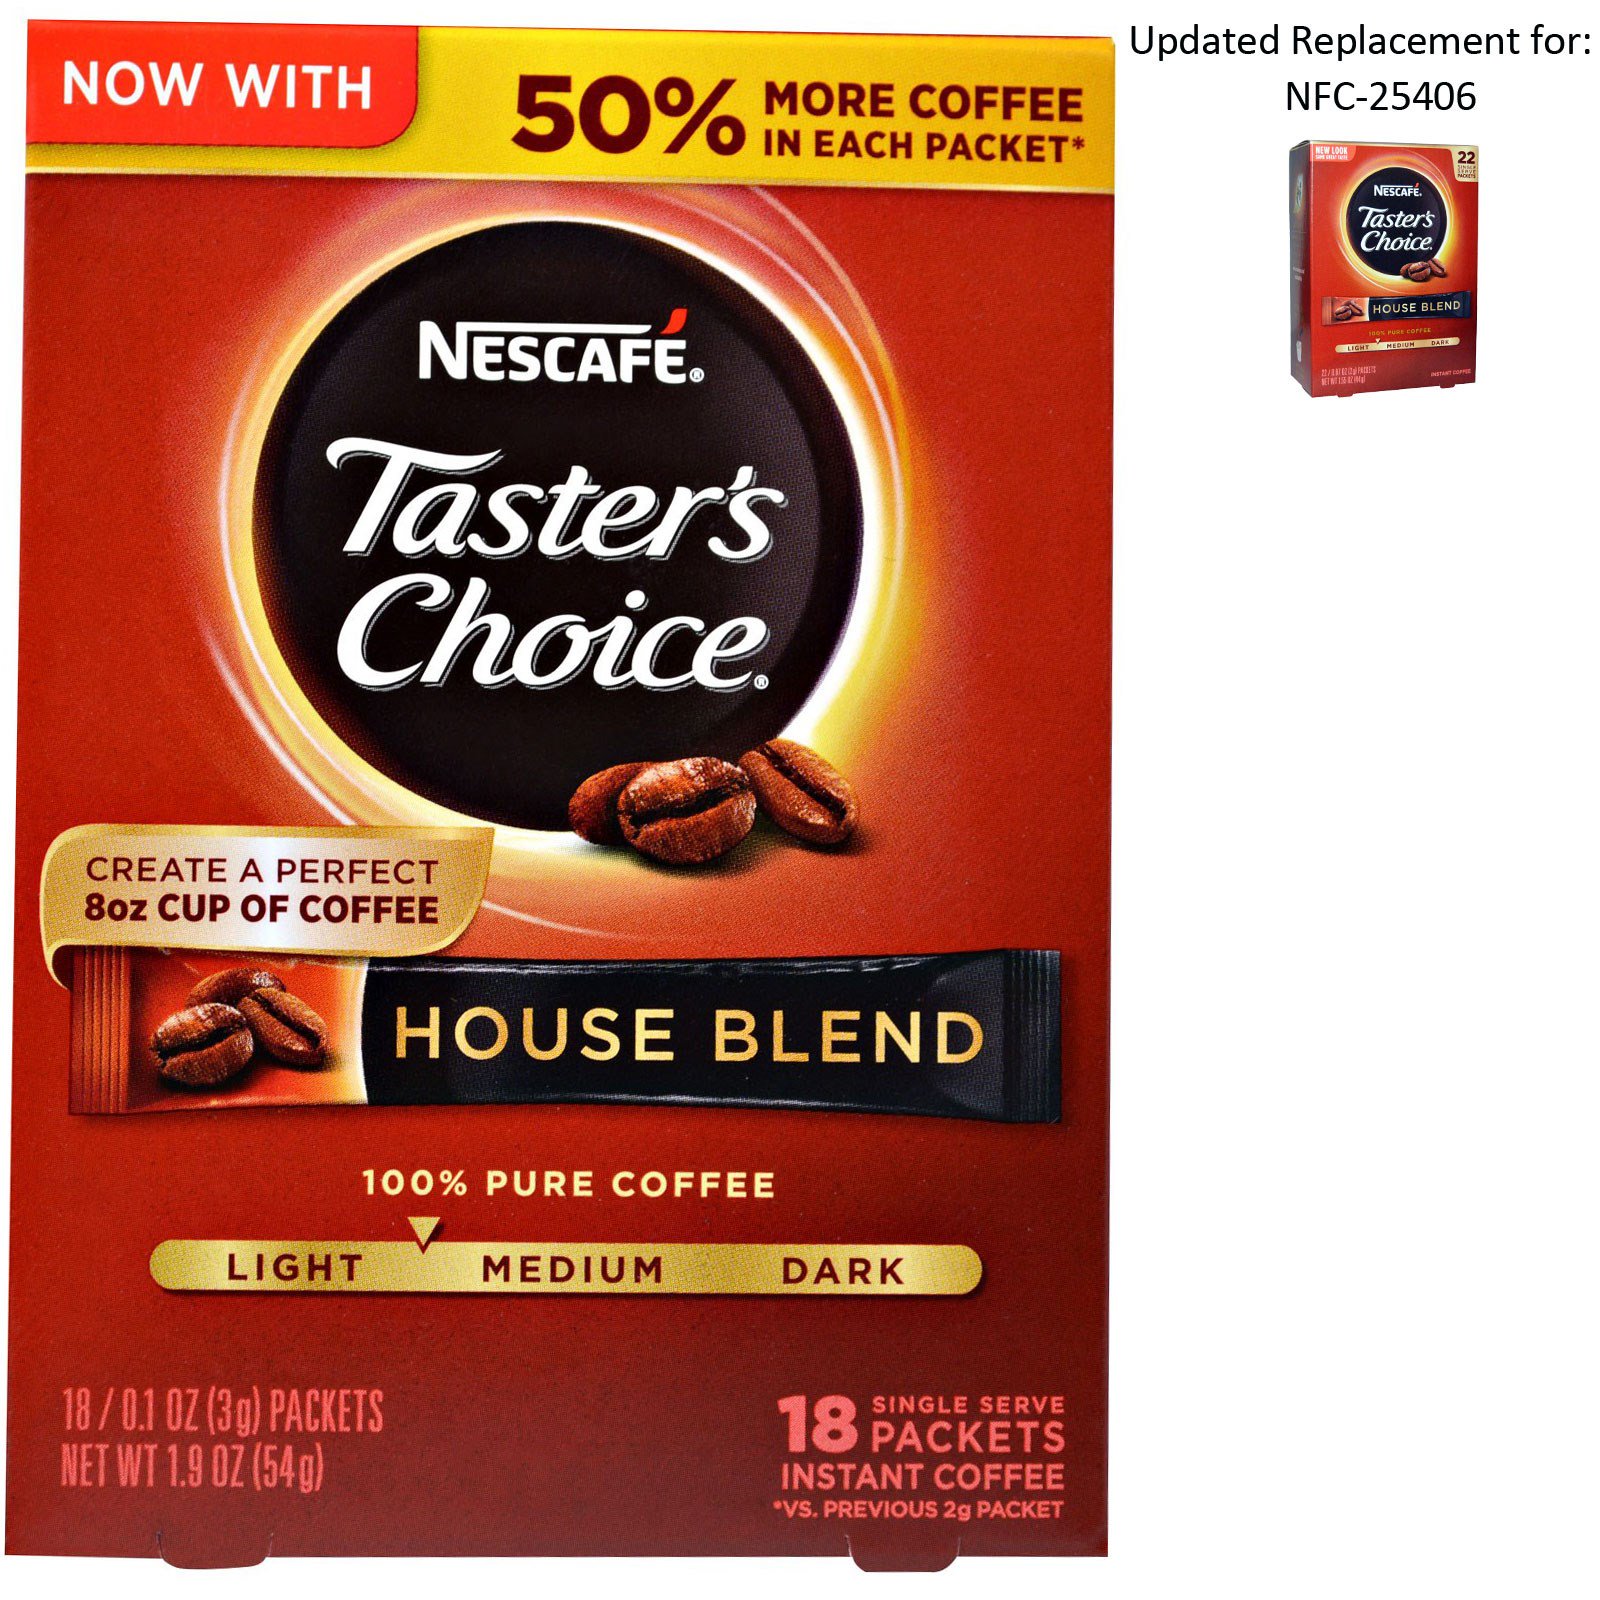 Кофе растворимый Tasters choice. Растворимый кофе Nescafe Taster's choice House Blend, в пакетиках. Dandy Blend растворимый. Растворимый кофе Nescafe Taster's choice Decaf House Blend, в пакетиках. Updates replaced